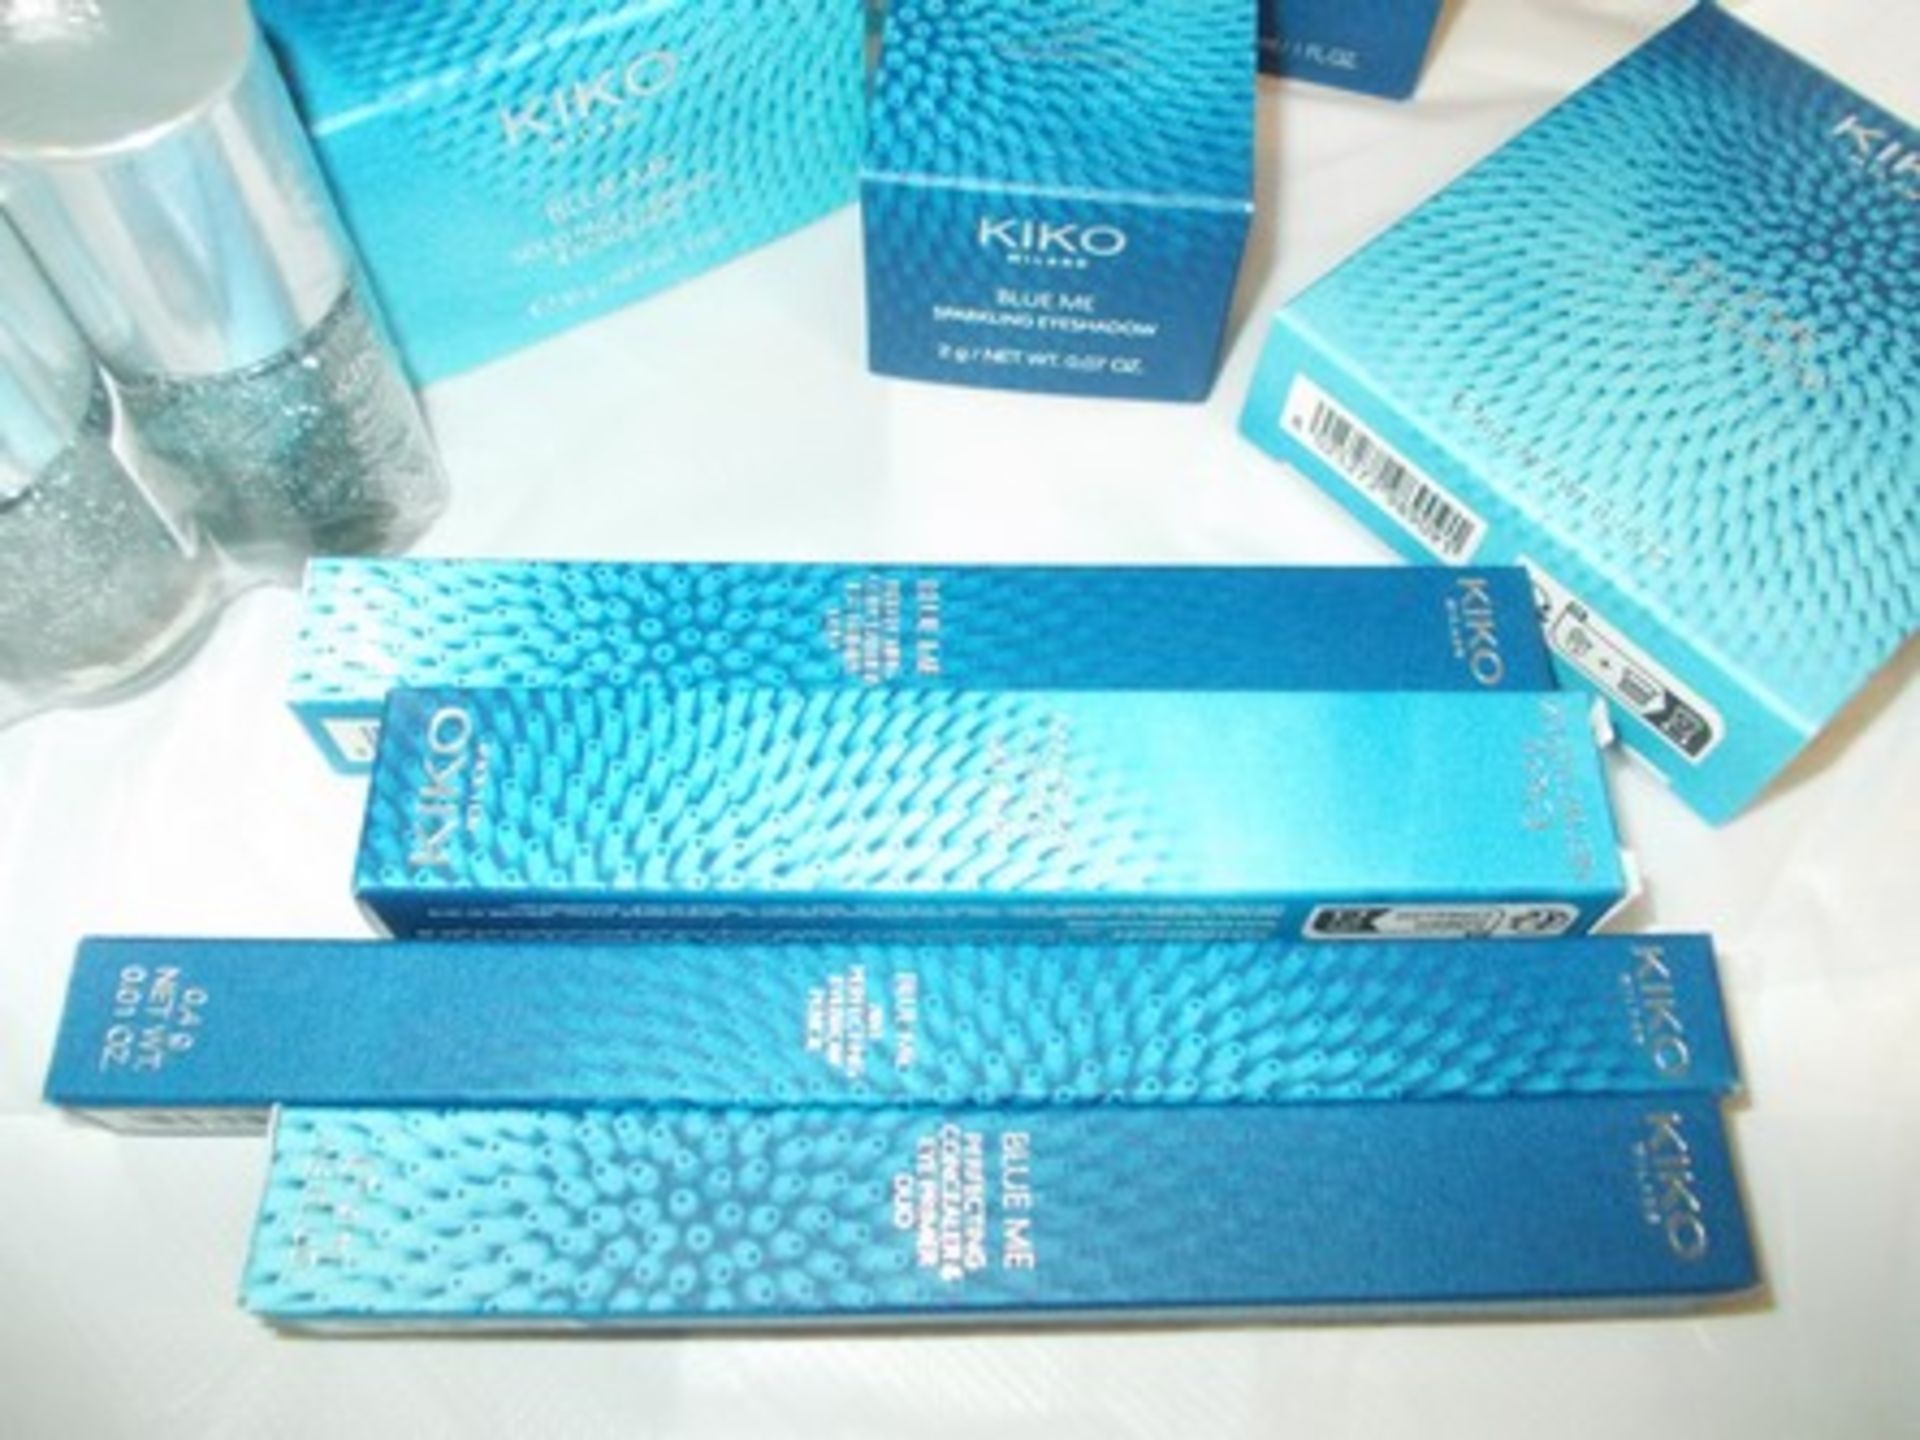 12 x Kiko Blue Me mixed cosmetics including foundation, jelly face serum, nail polish, sparkling eye - Image 2 of 3